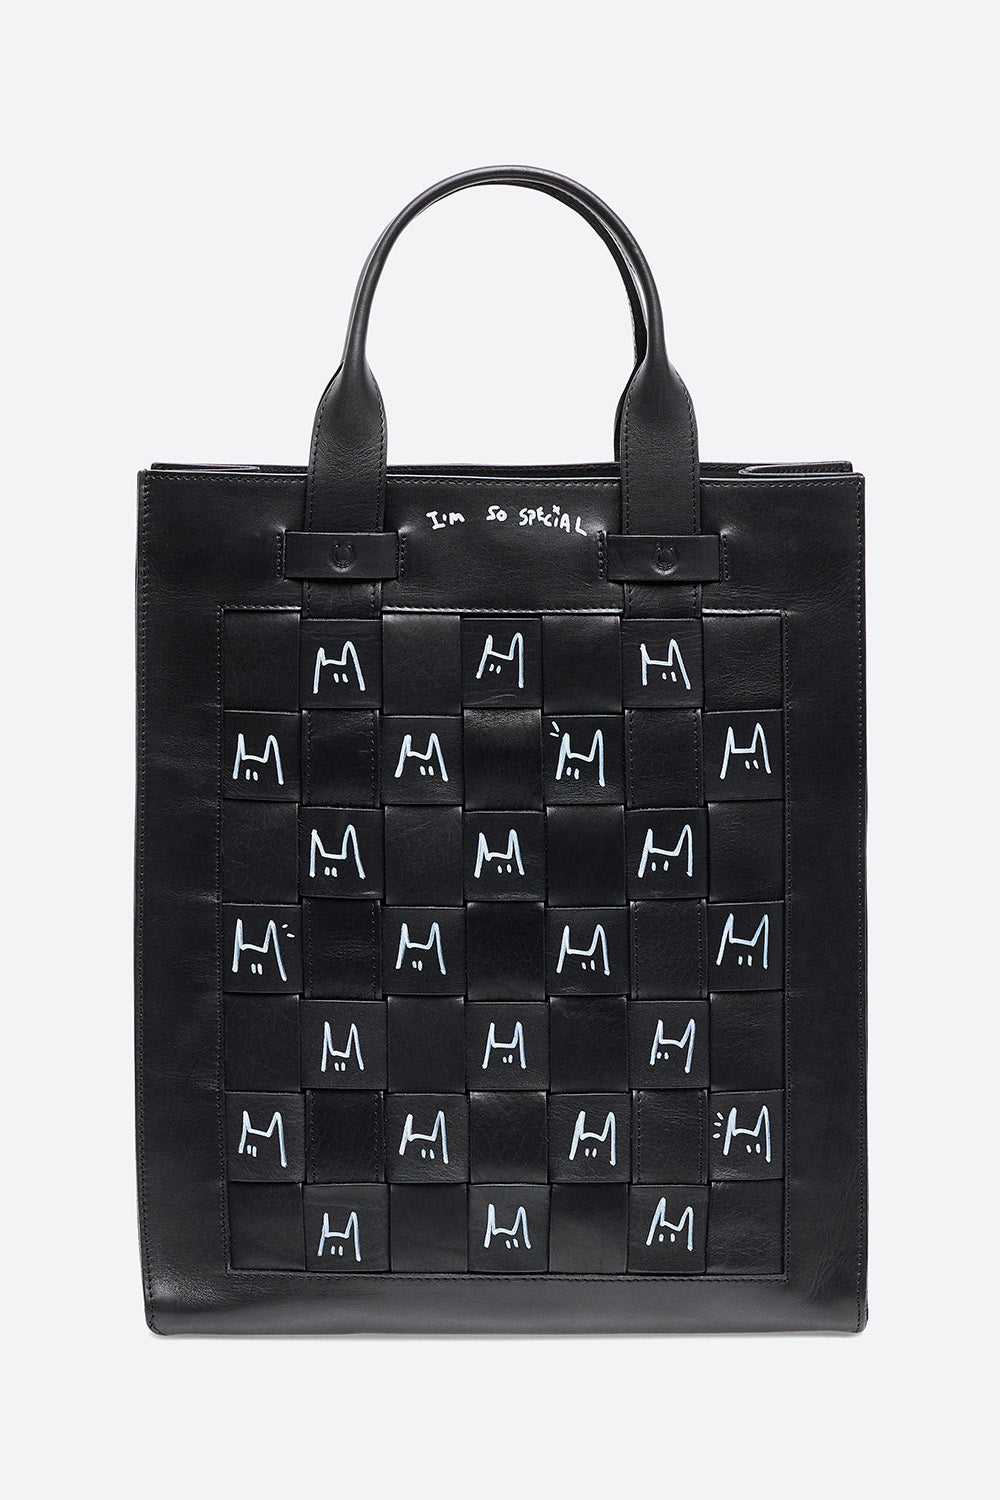 MIAMI Black Leather Monogram Tote Bag with Scarf